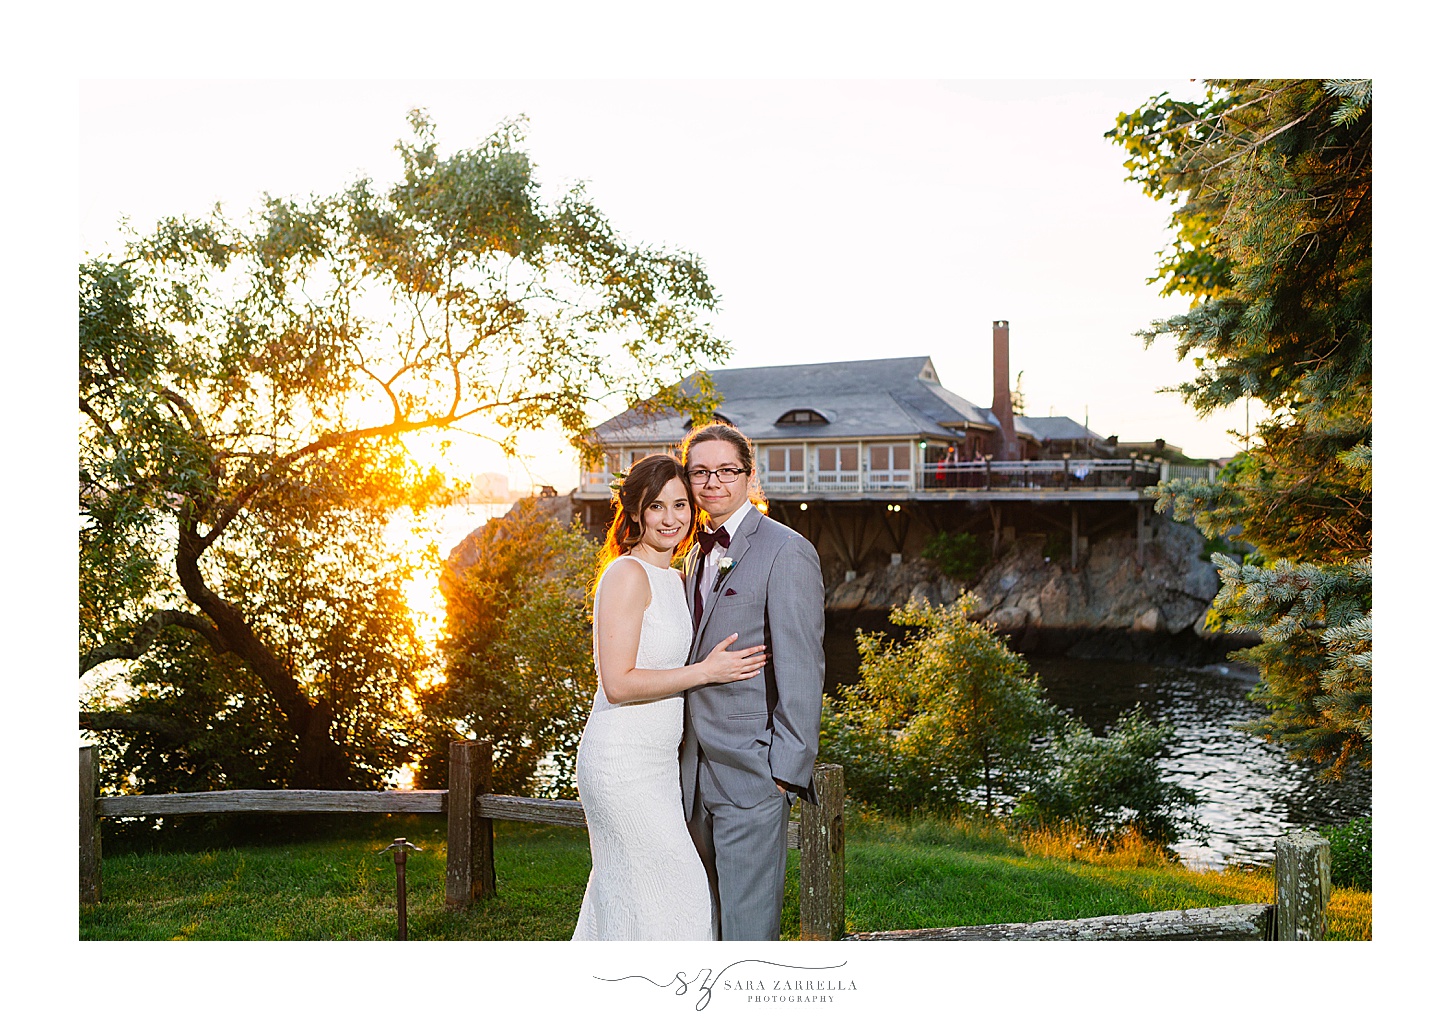 RI sunset wedding portraits by Sara Zarrella Photography